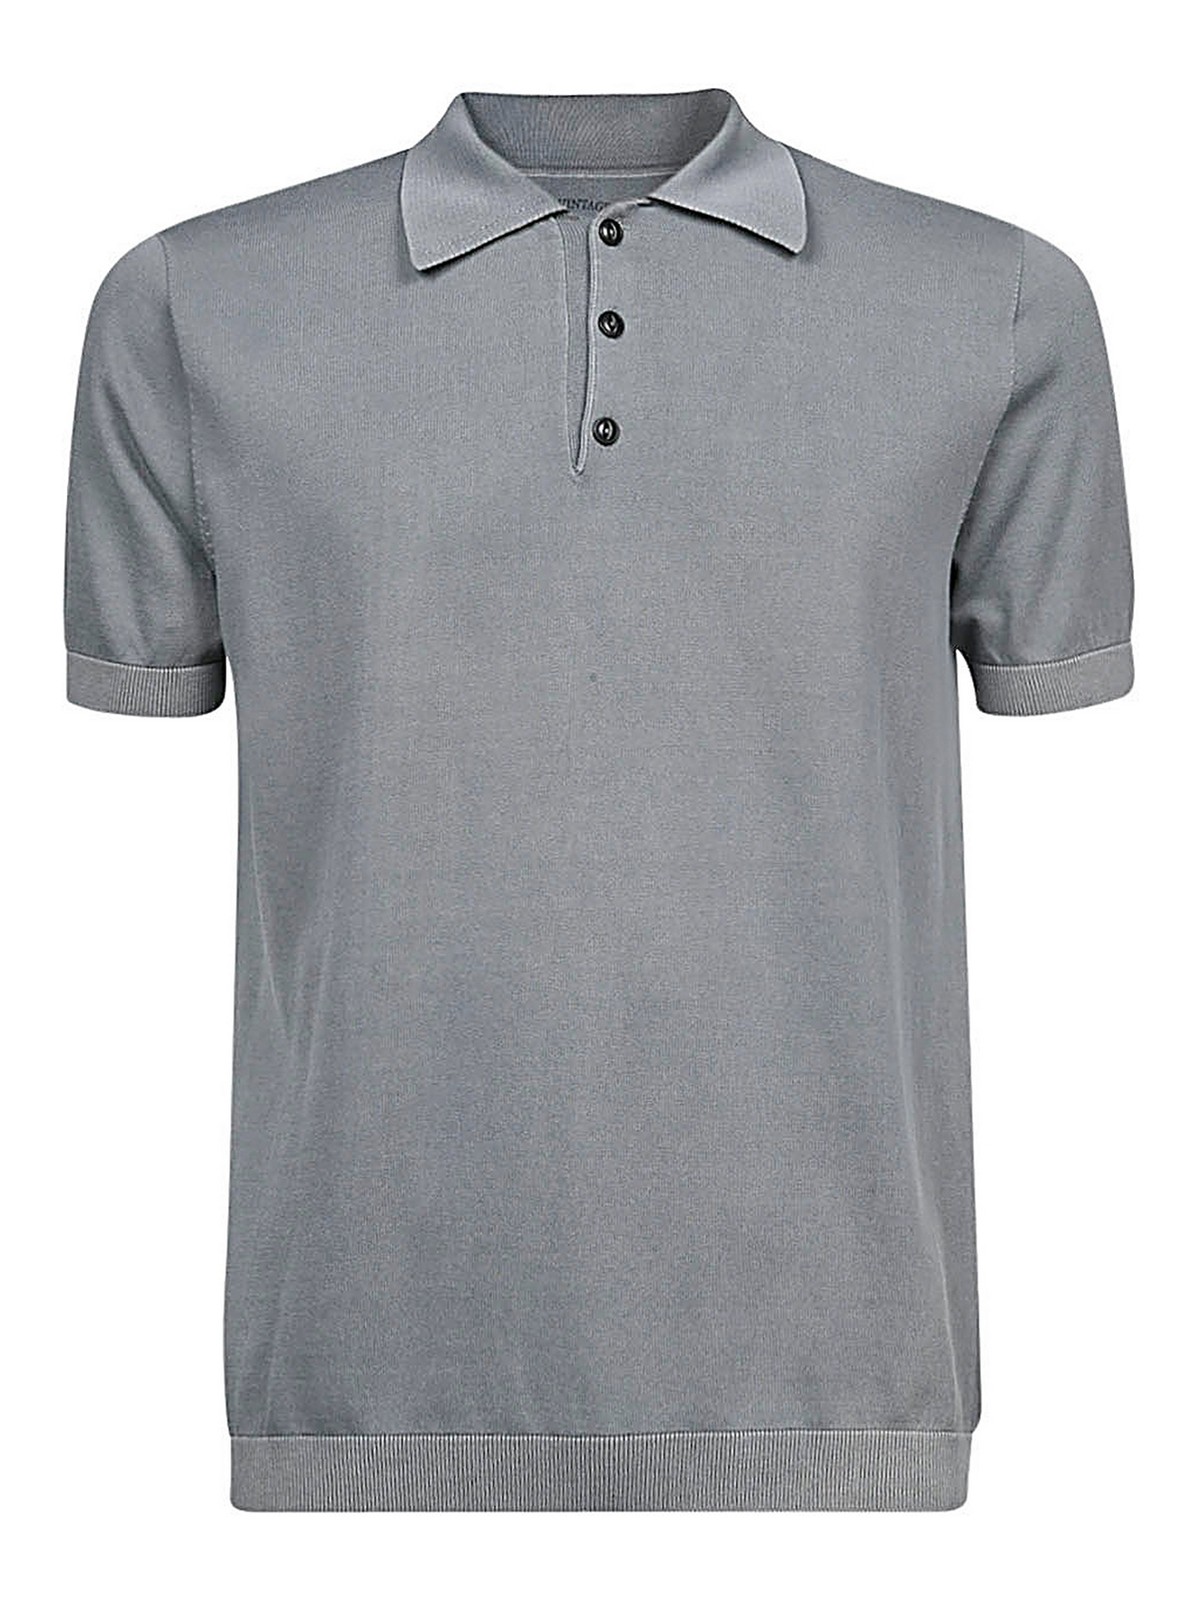 Original Vintage Style Cotton Polo Shirt In Grey